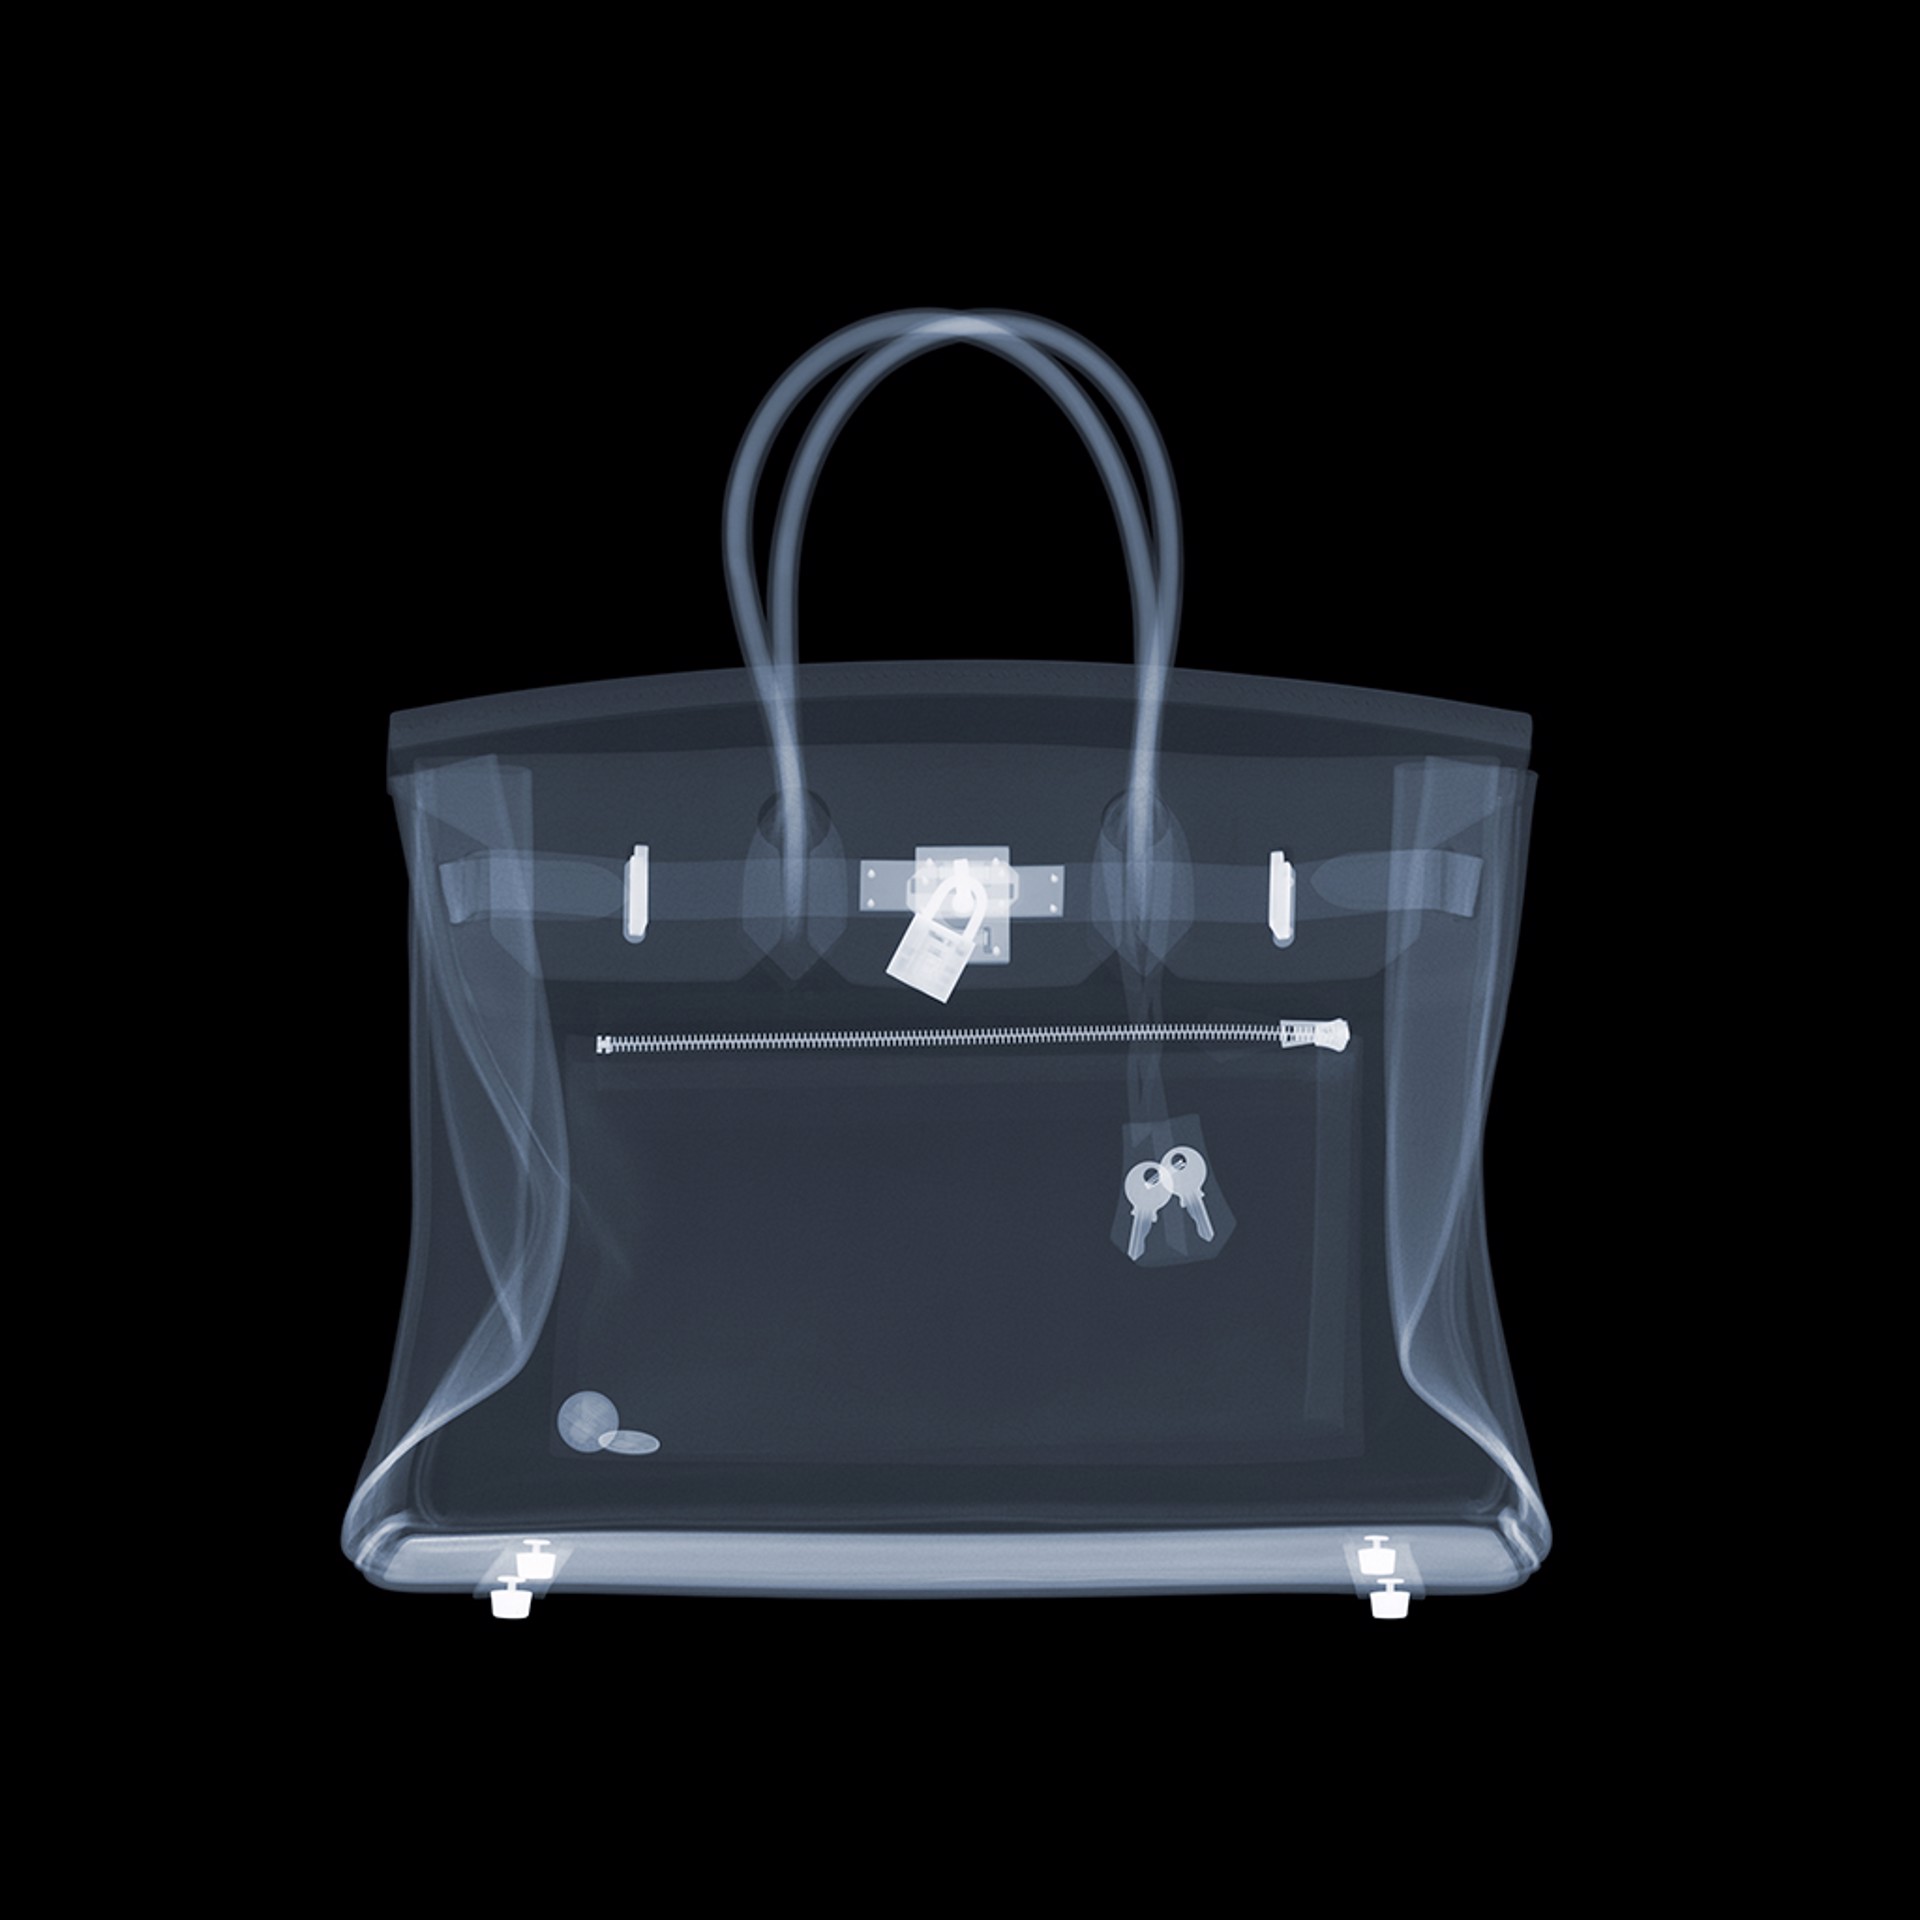 Hermes Birkin Bag by Nick Veasey